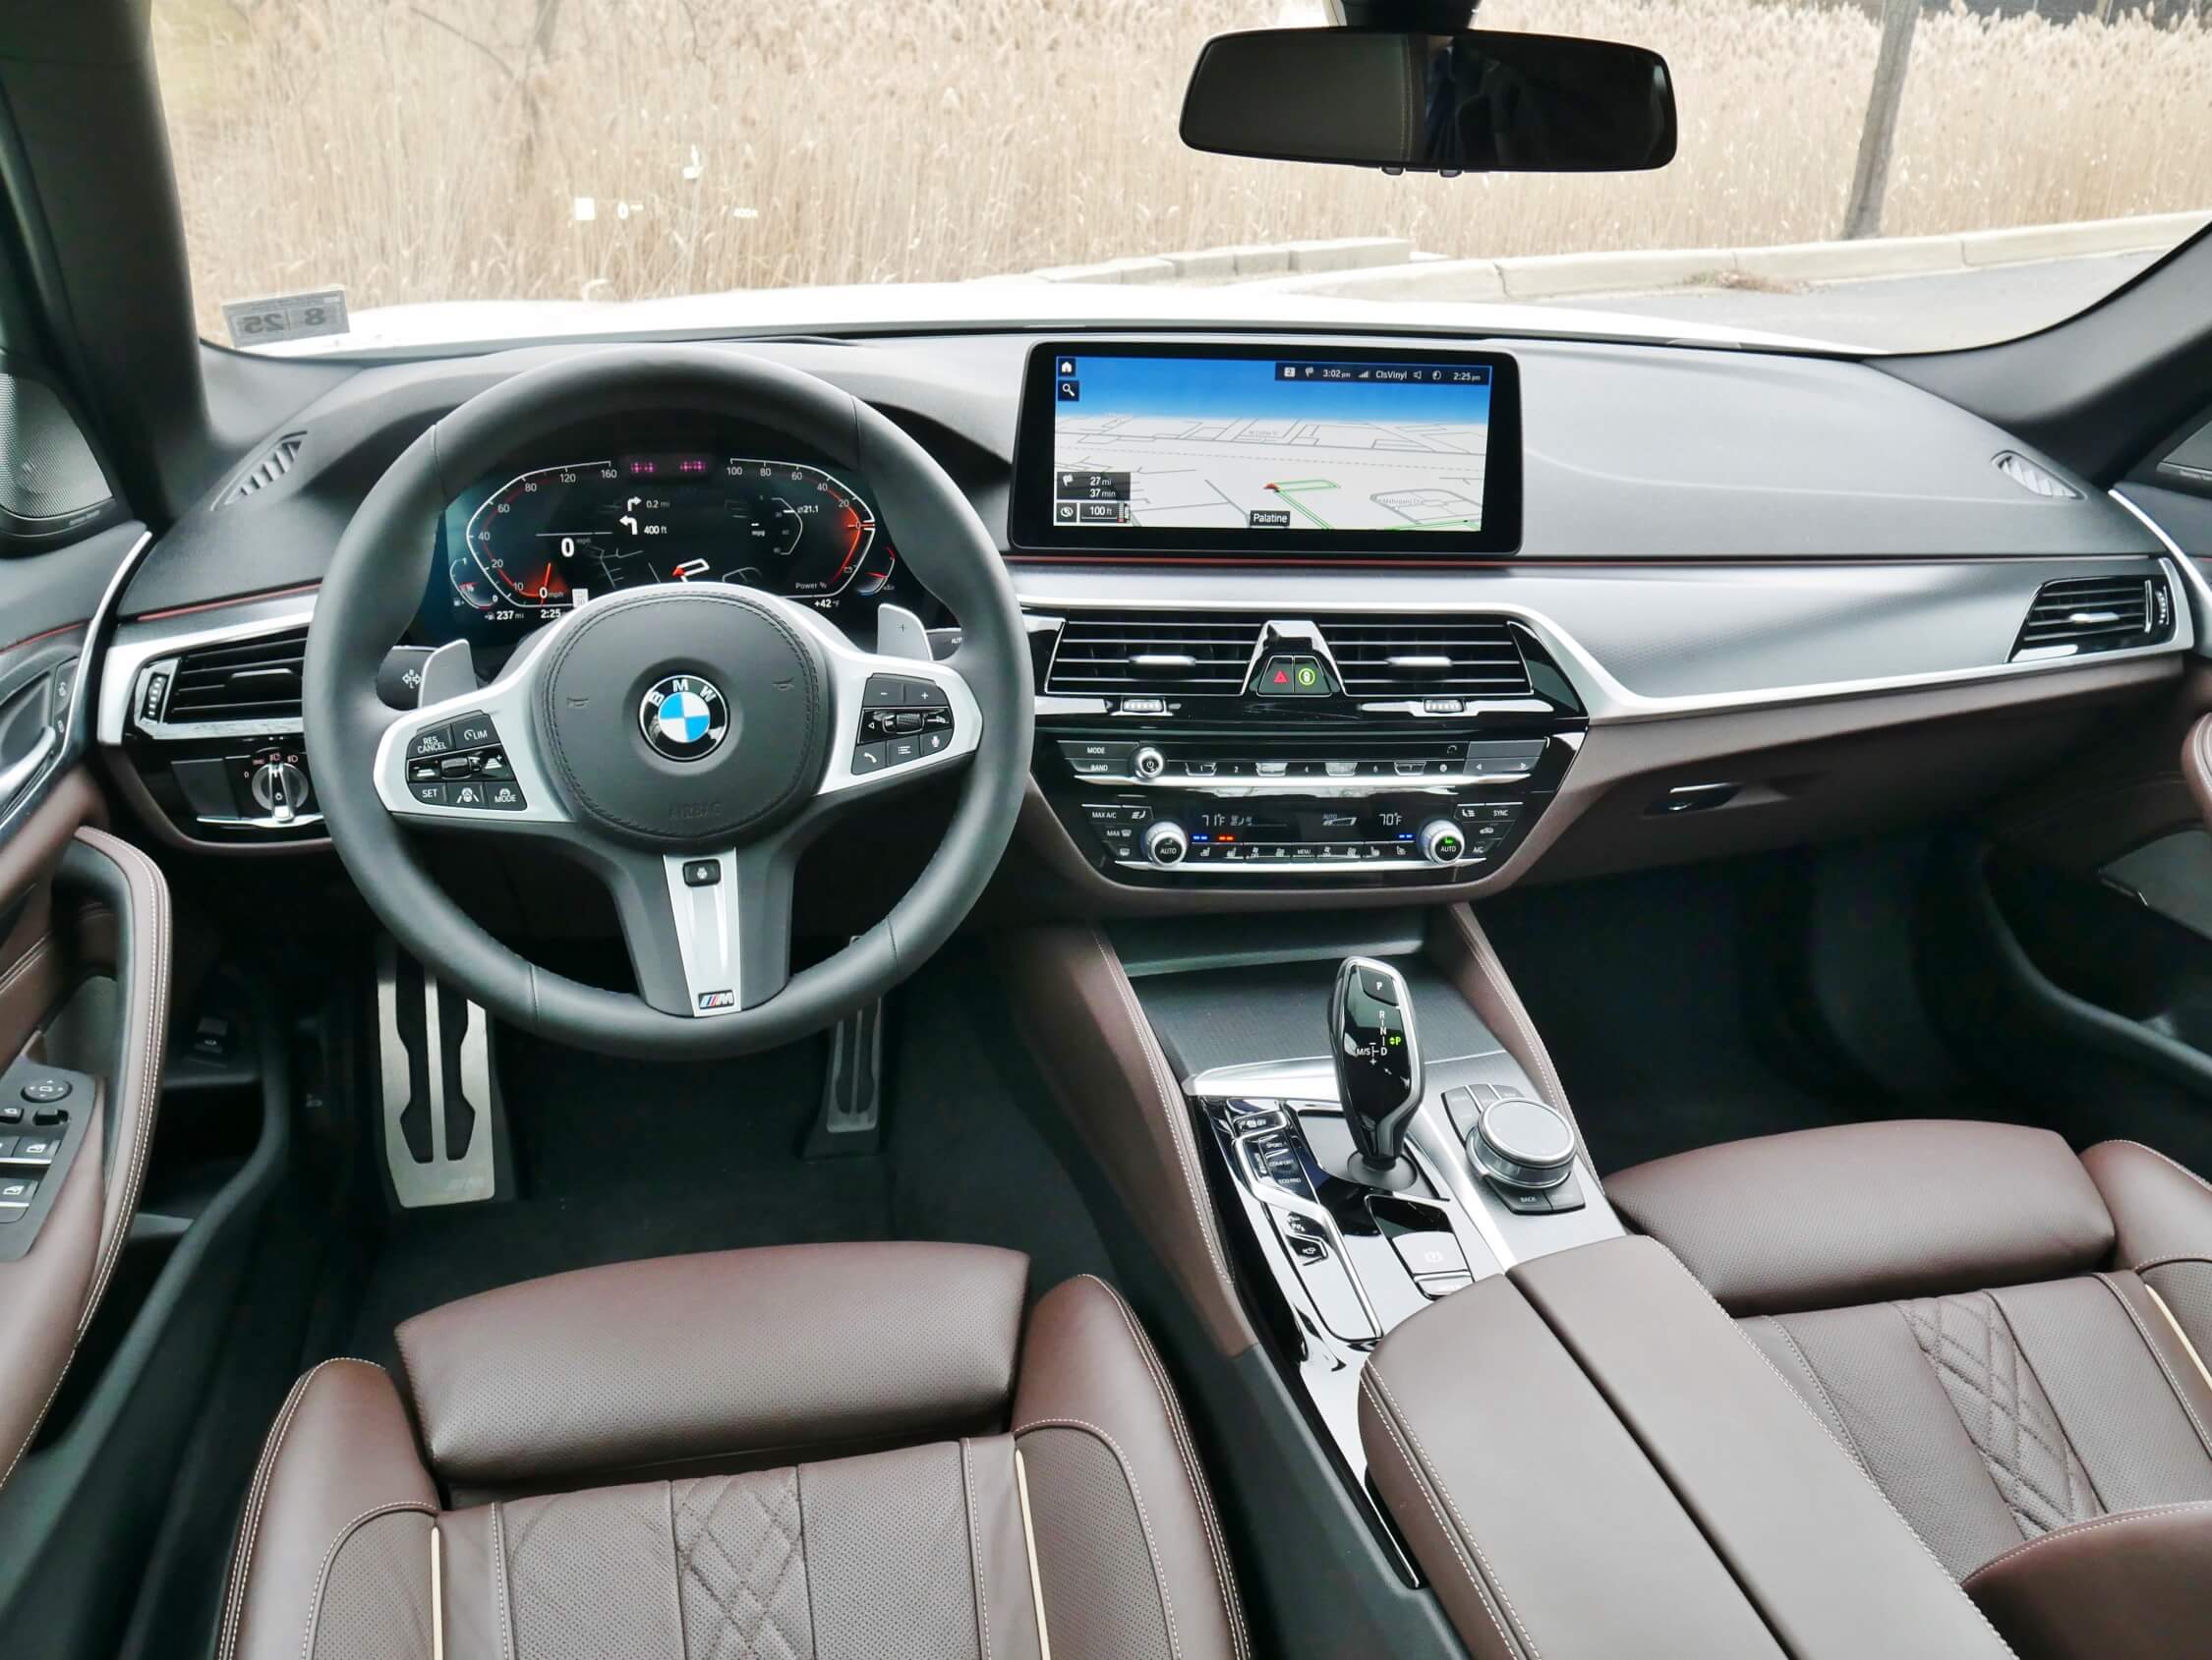 2021 BMW 540i xDrive: a bespoke yet restrained futuristic cockpit